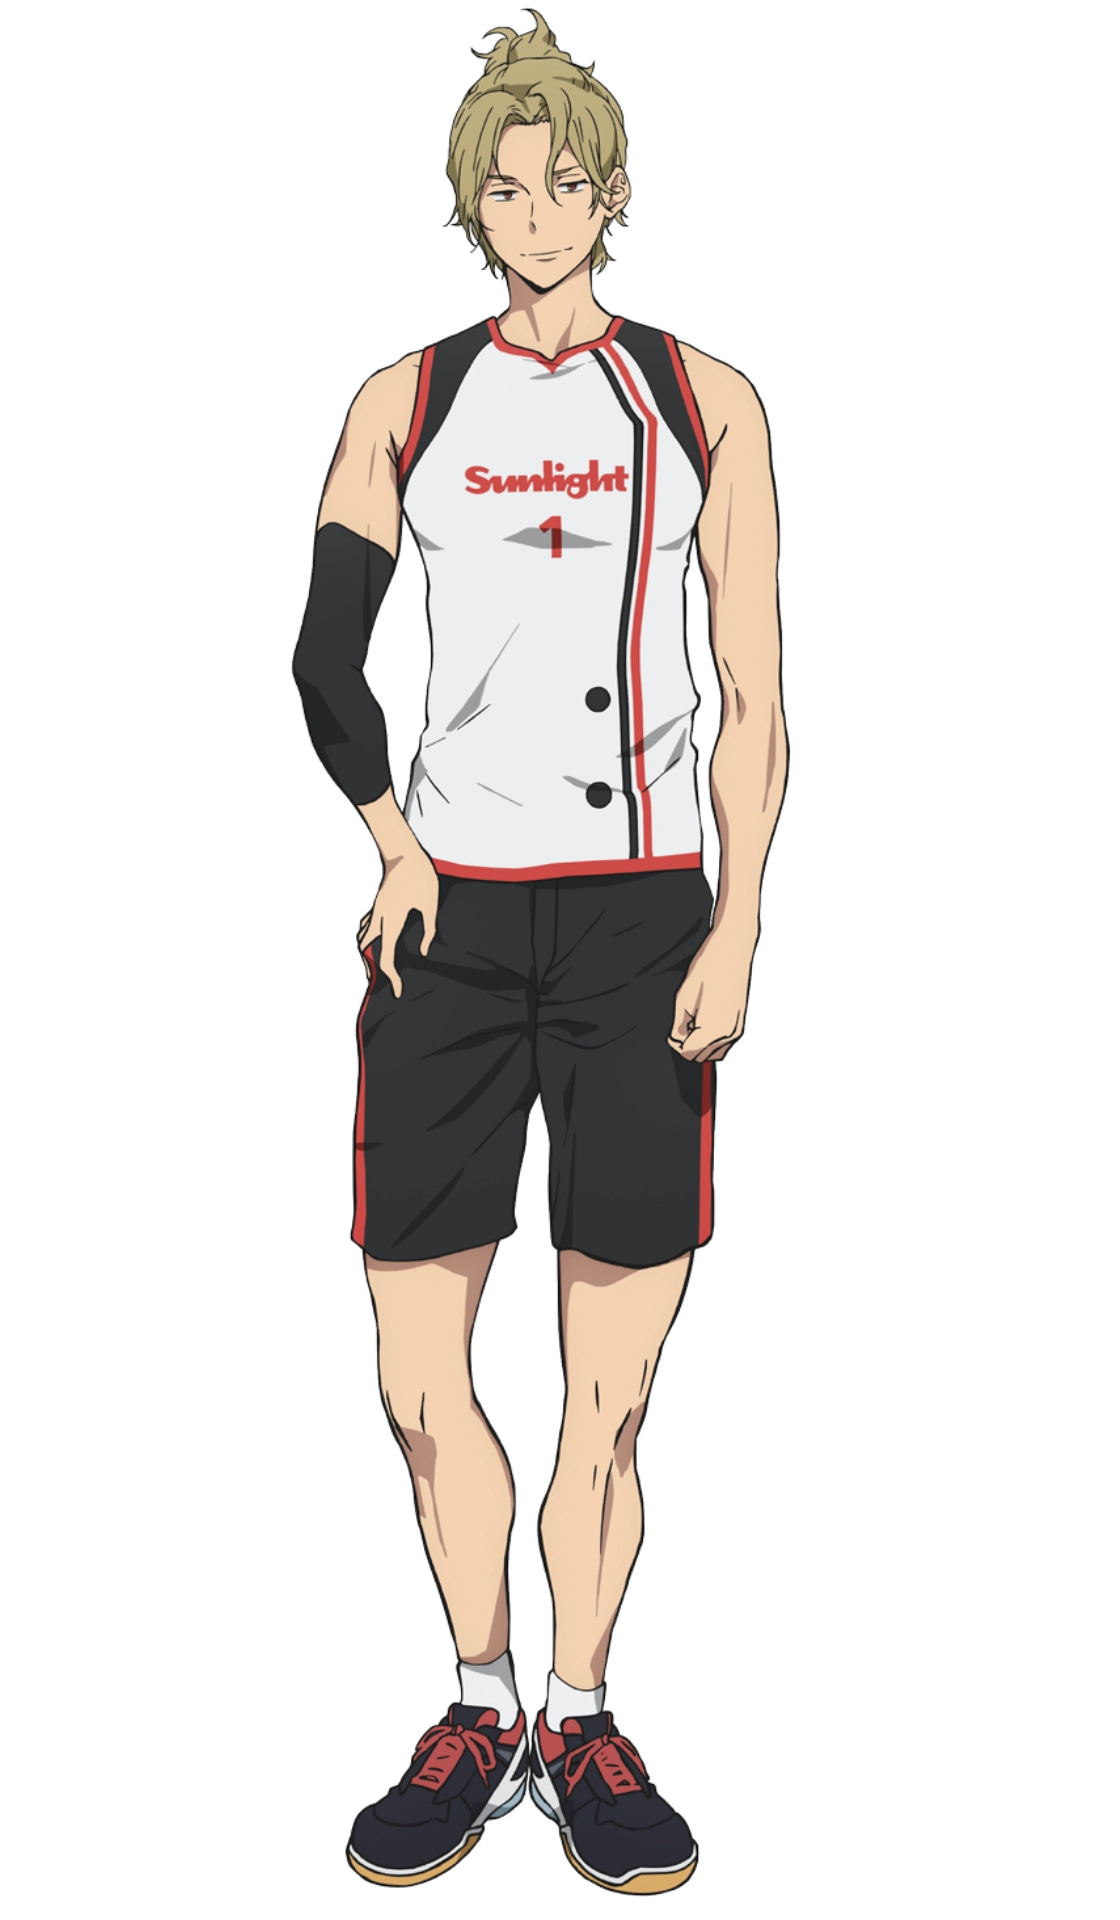 Tatsuru from the badminton anime [Ryman's Club] : r/bishounen